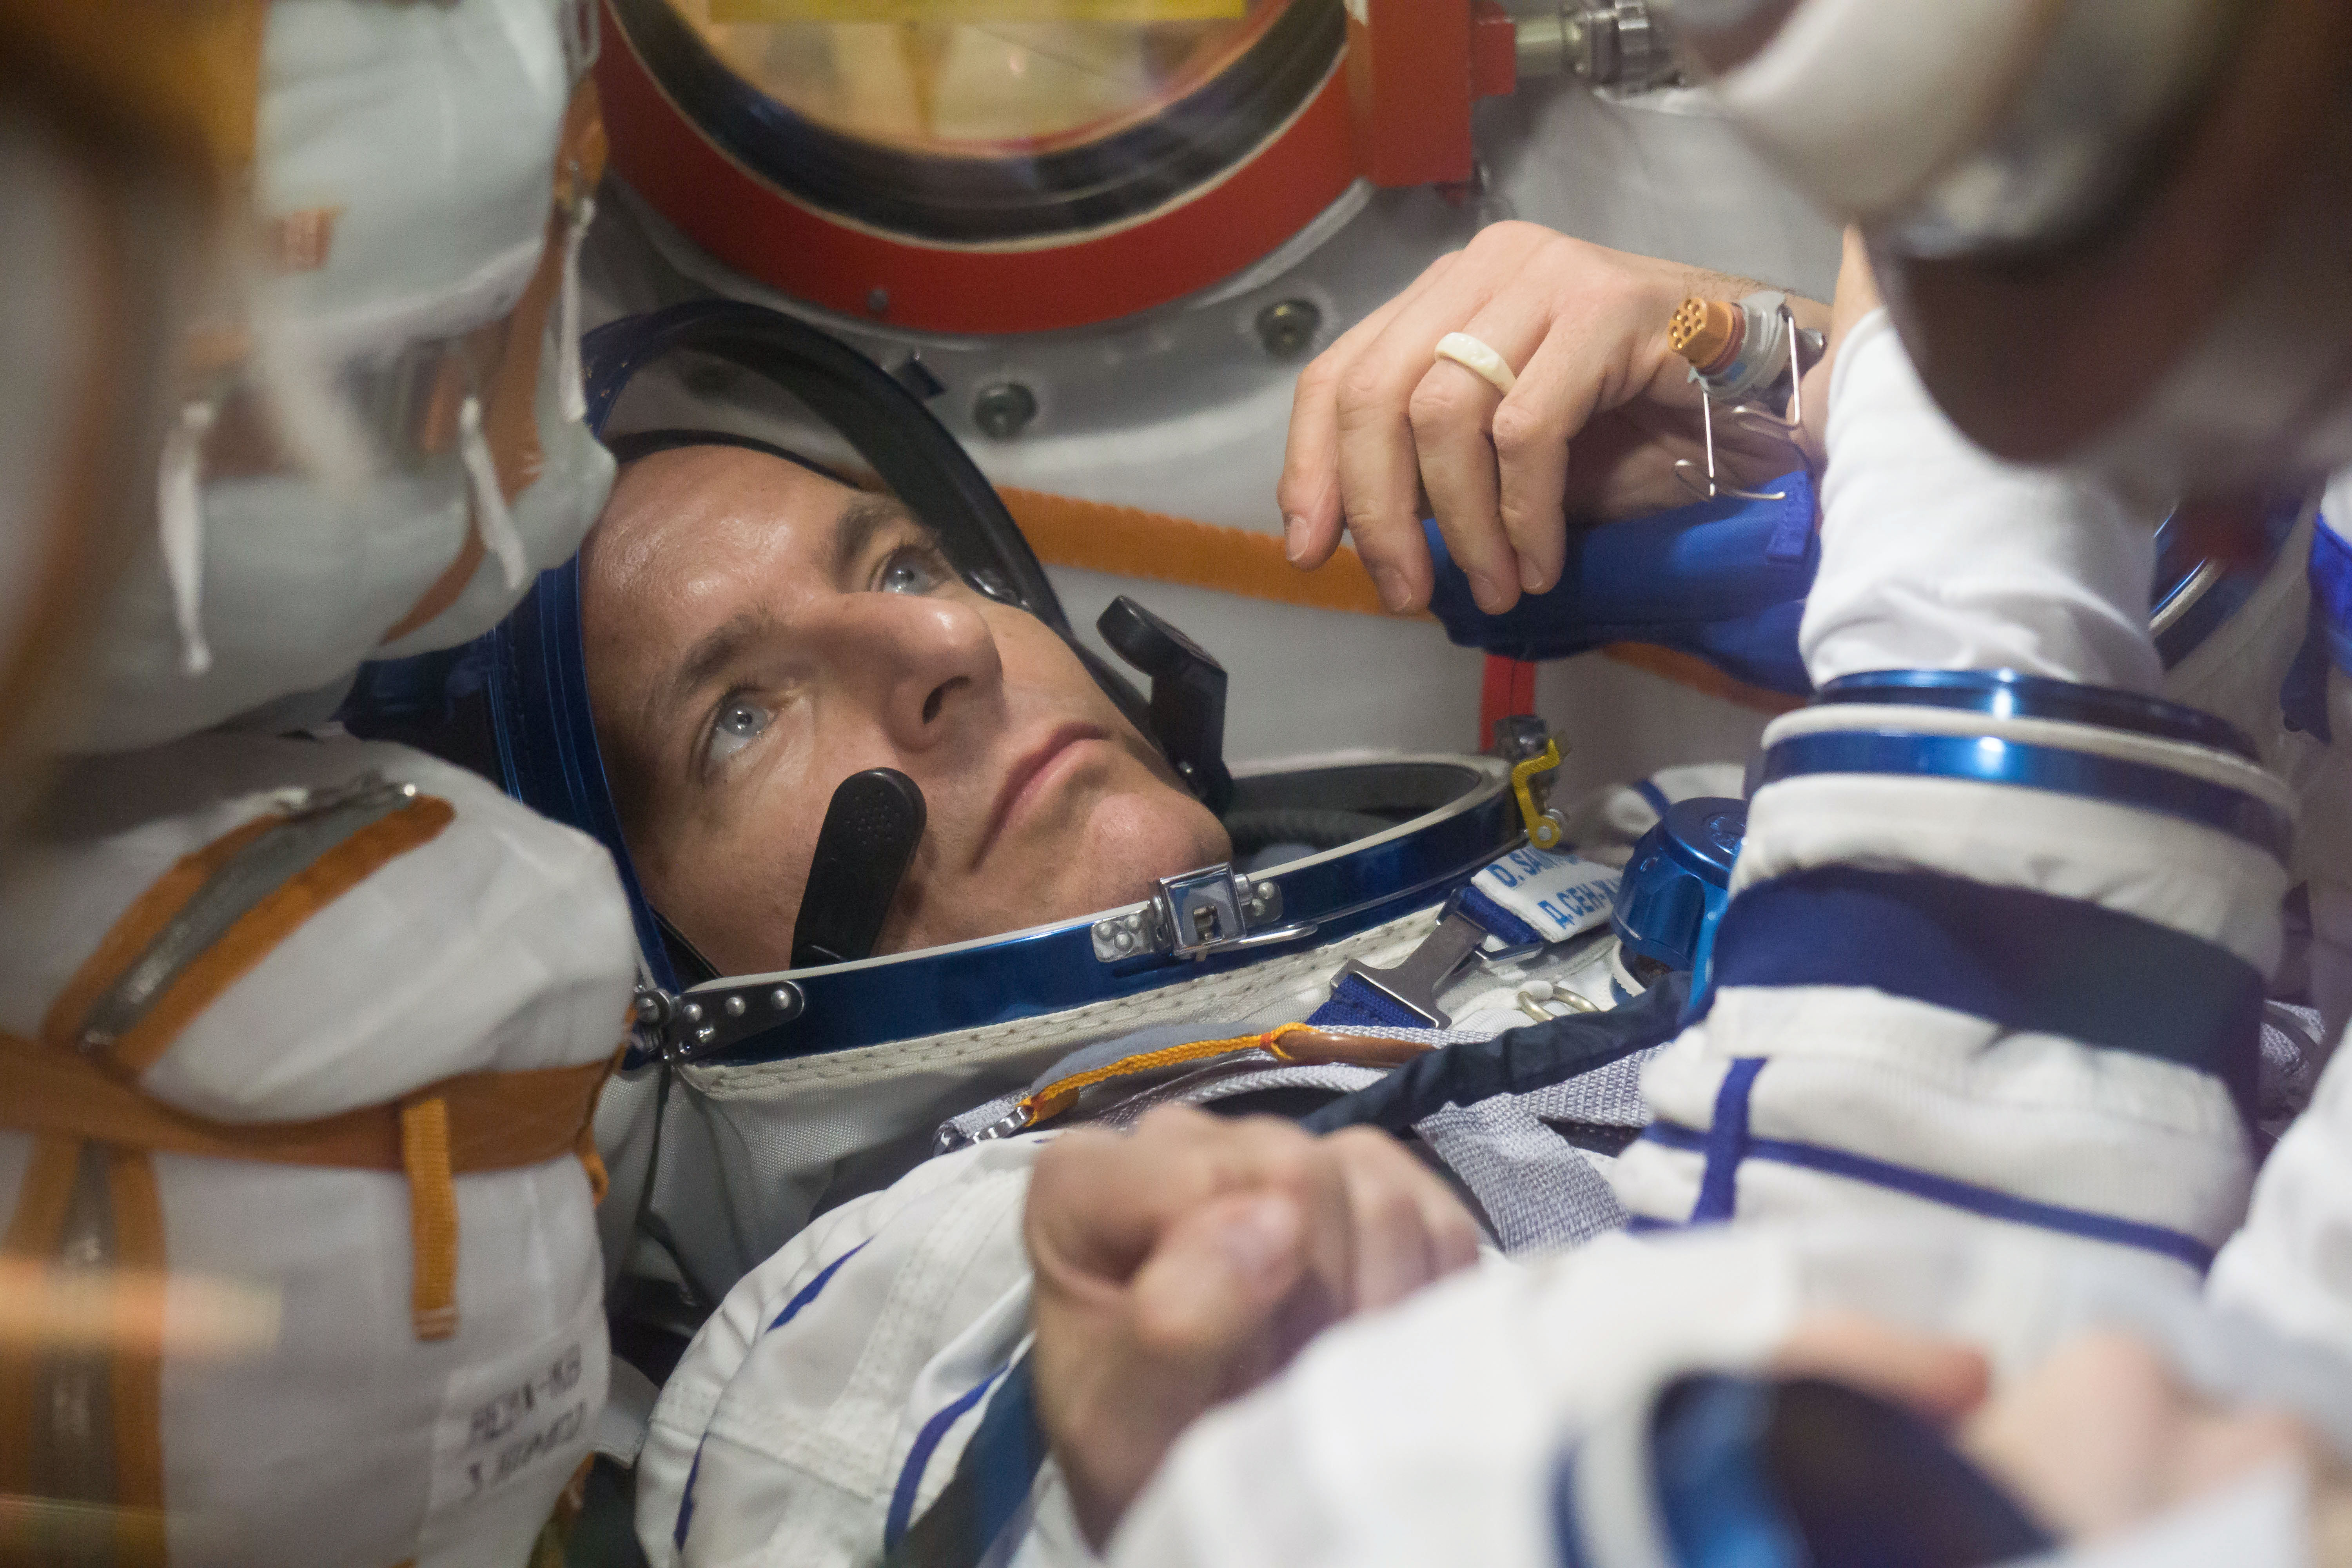 Astronaut David-Saint Jacques in the Soyuz capsule, close-up of face.